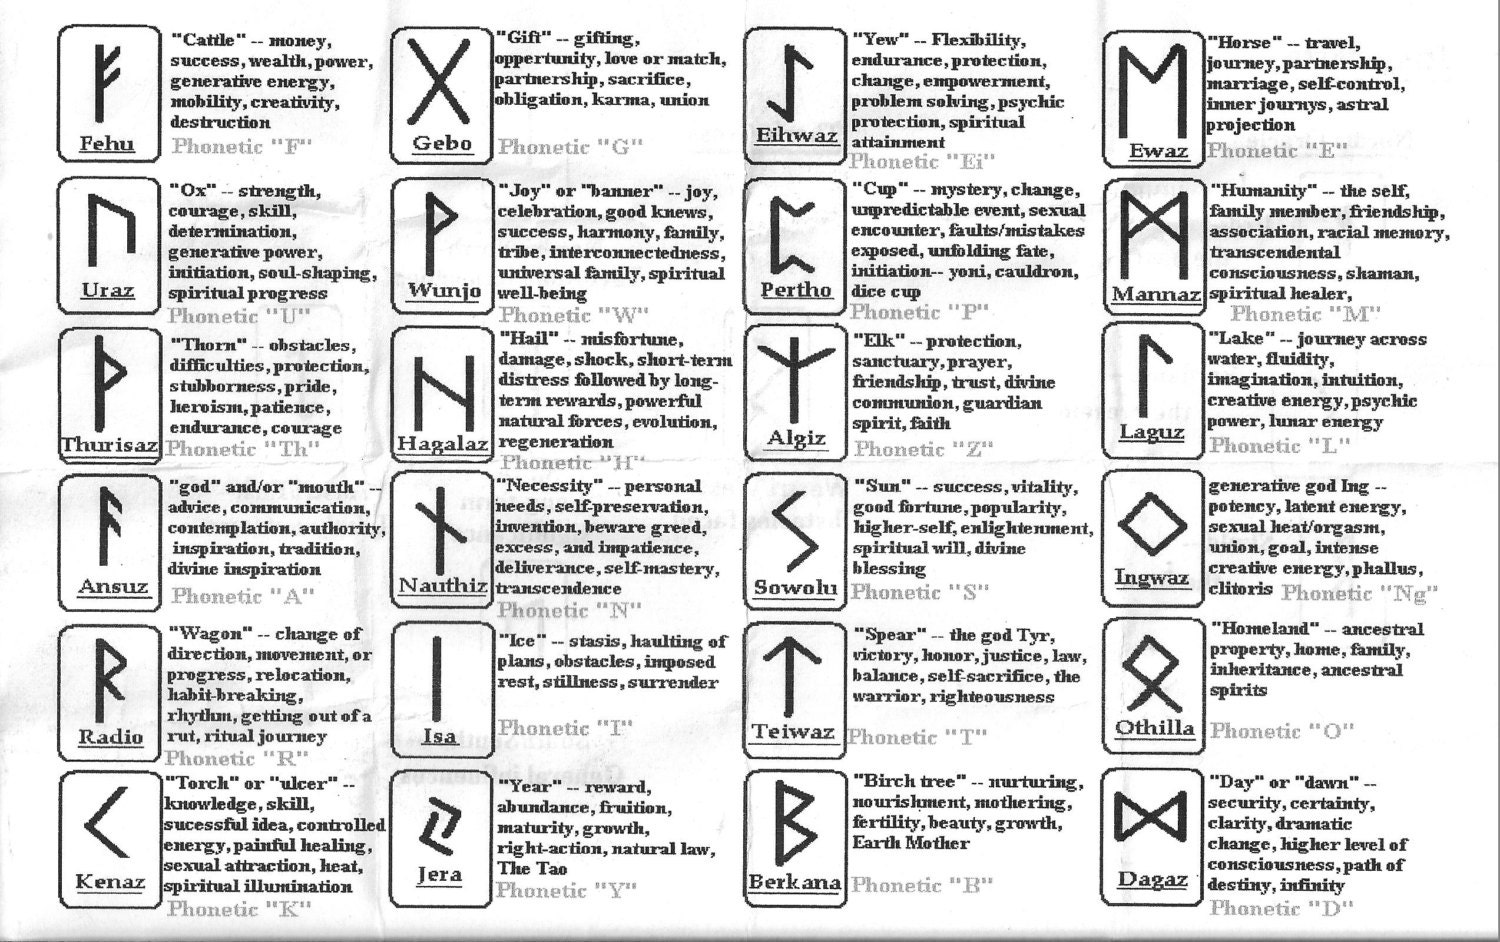 runes of the elder futhark